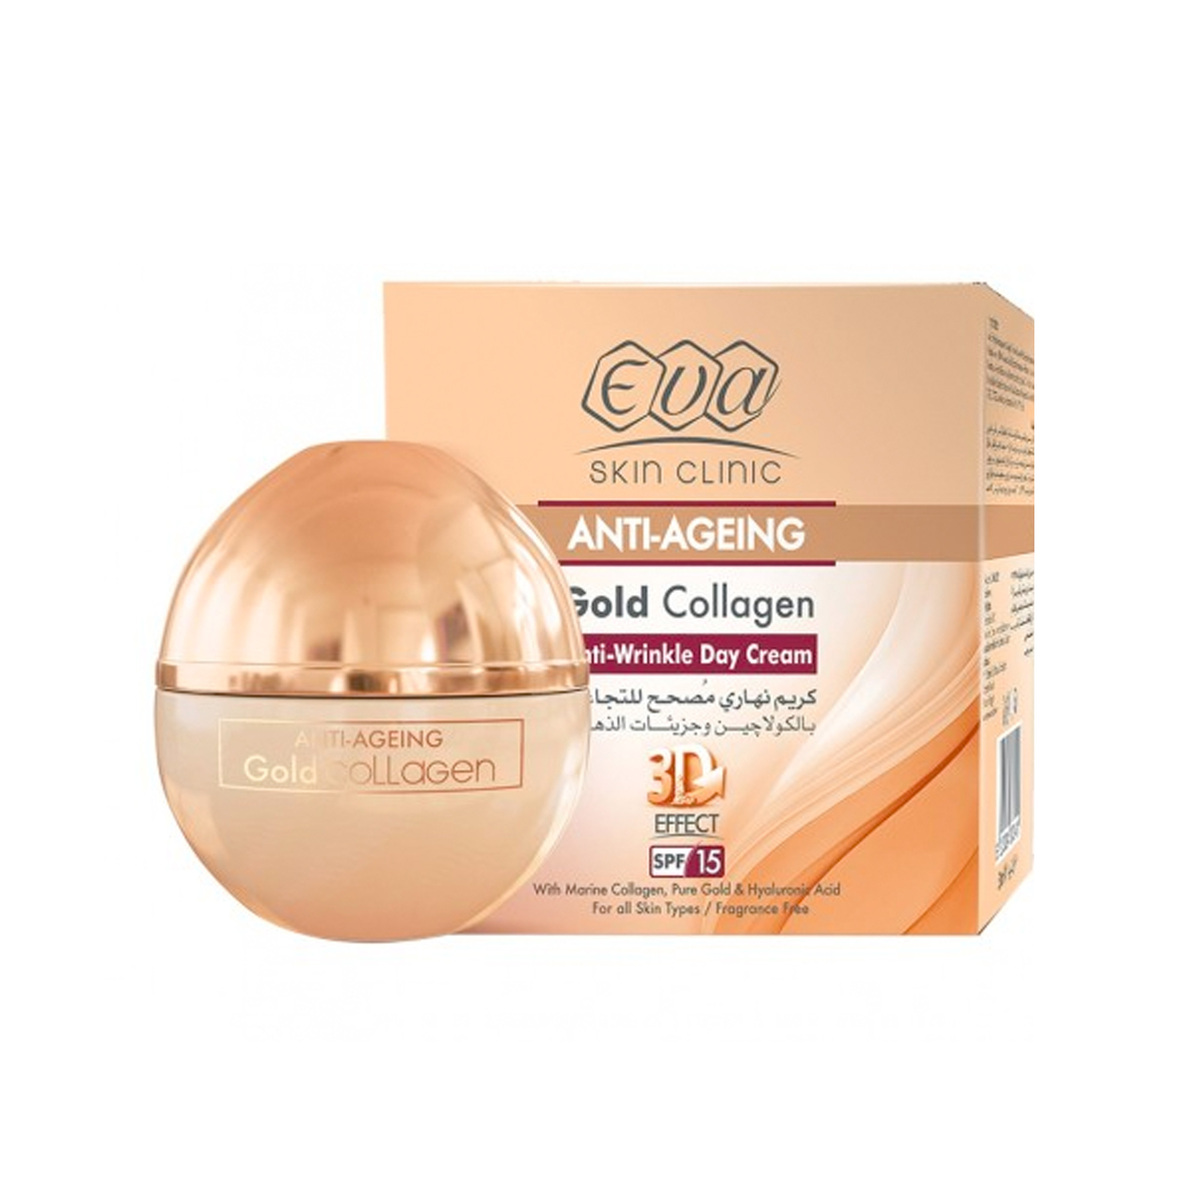 Eva Skin Clinic Gold Collagen Anti-Ageing Anti-Wrinkle Day Cream SPF15 50ml